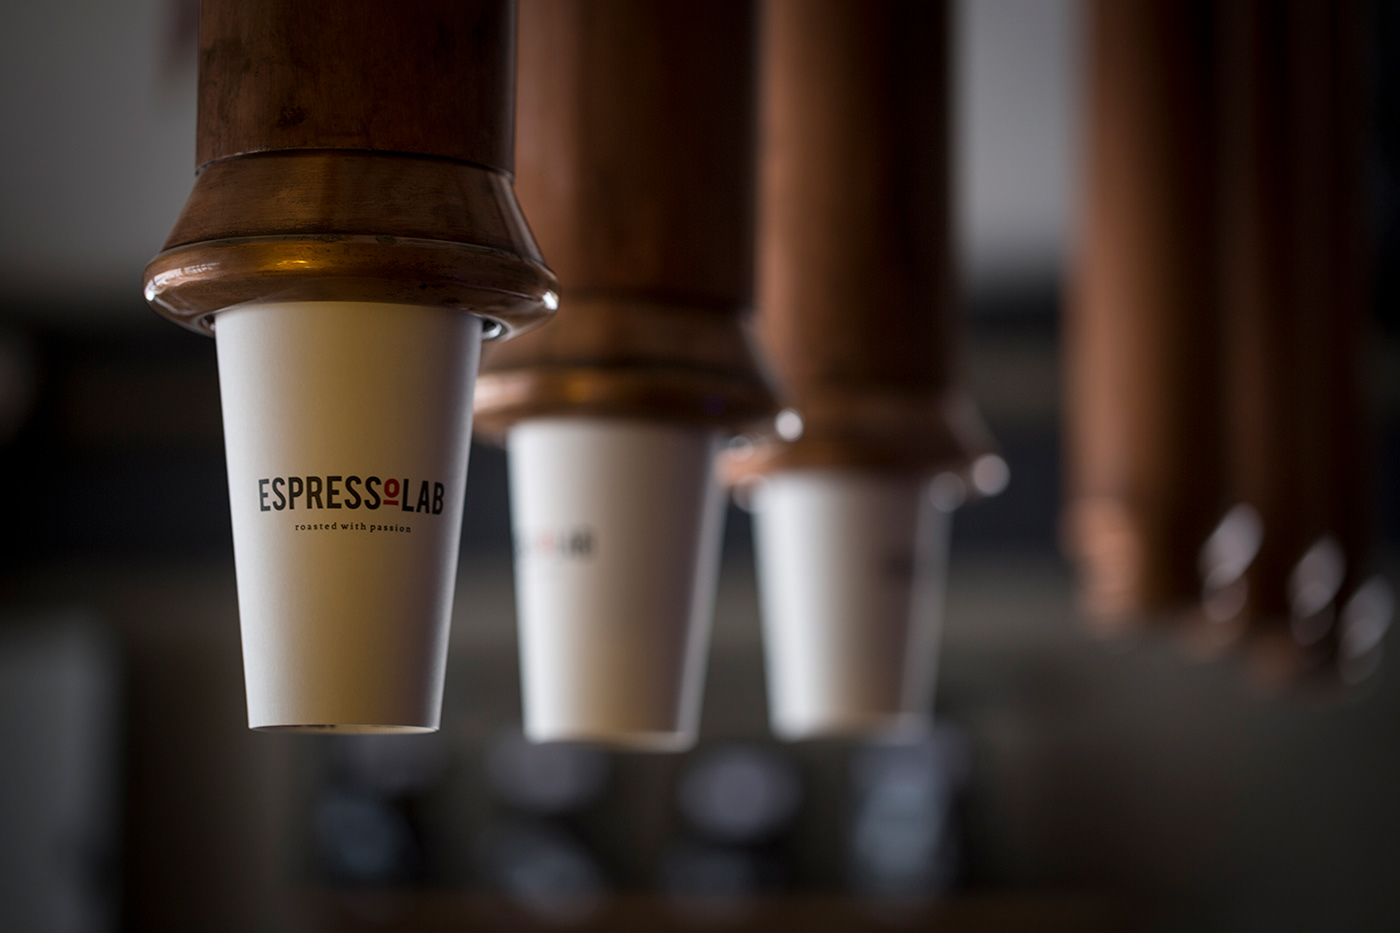 coffeeshop Coffee cafe espressolab istanbul place shop espresso latte americano lettering wood